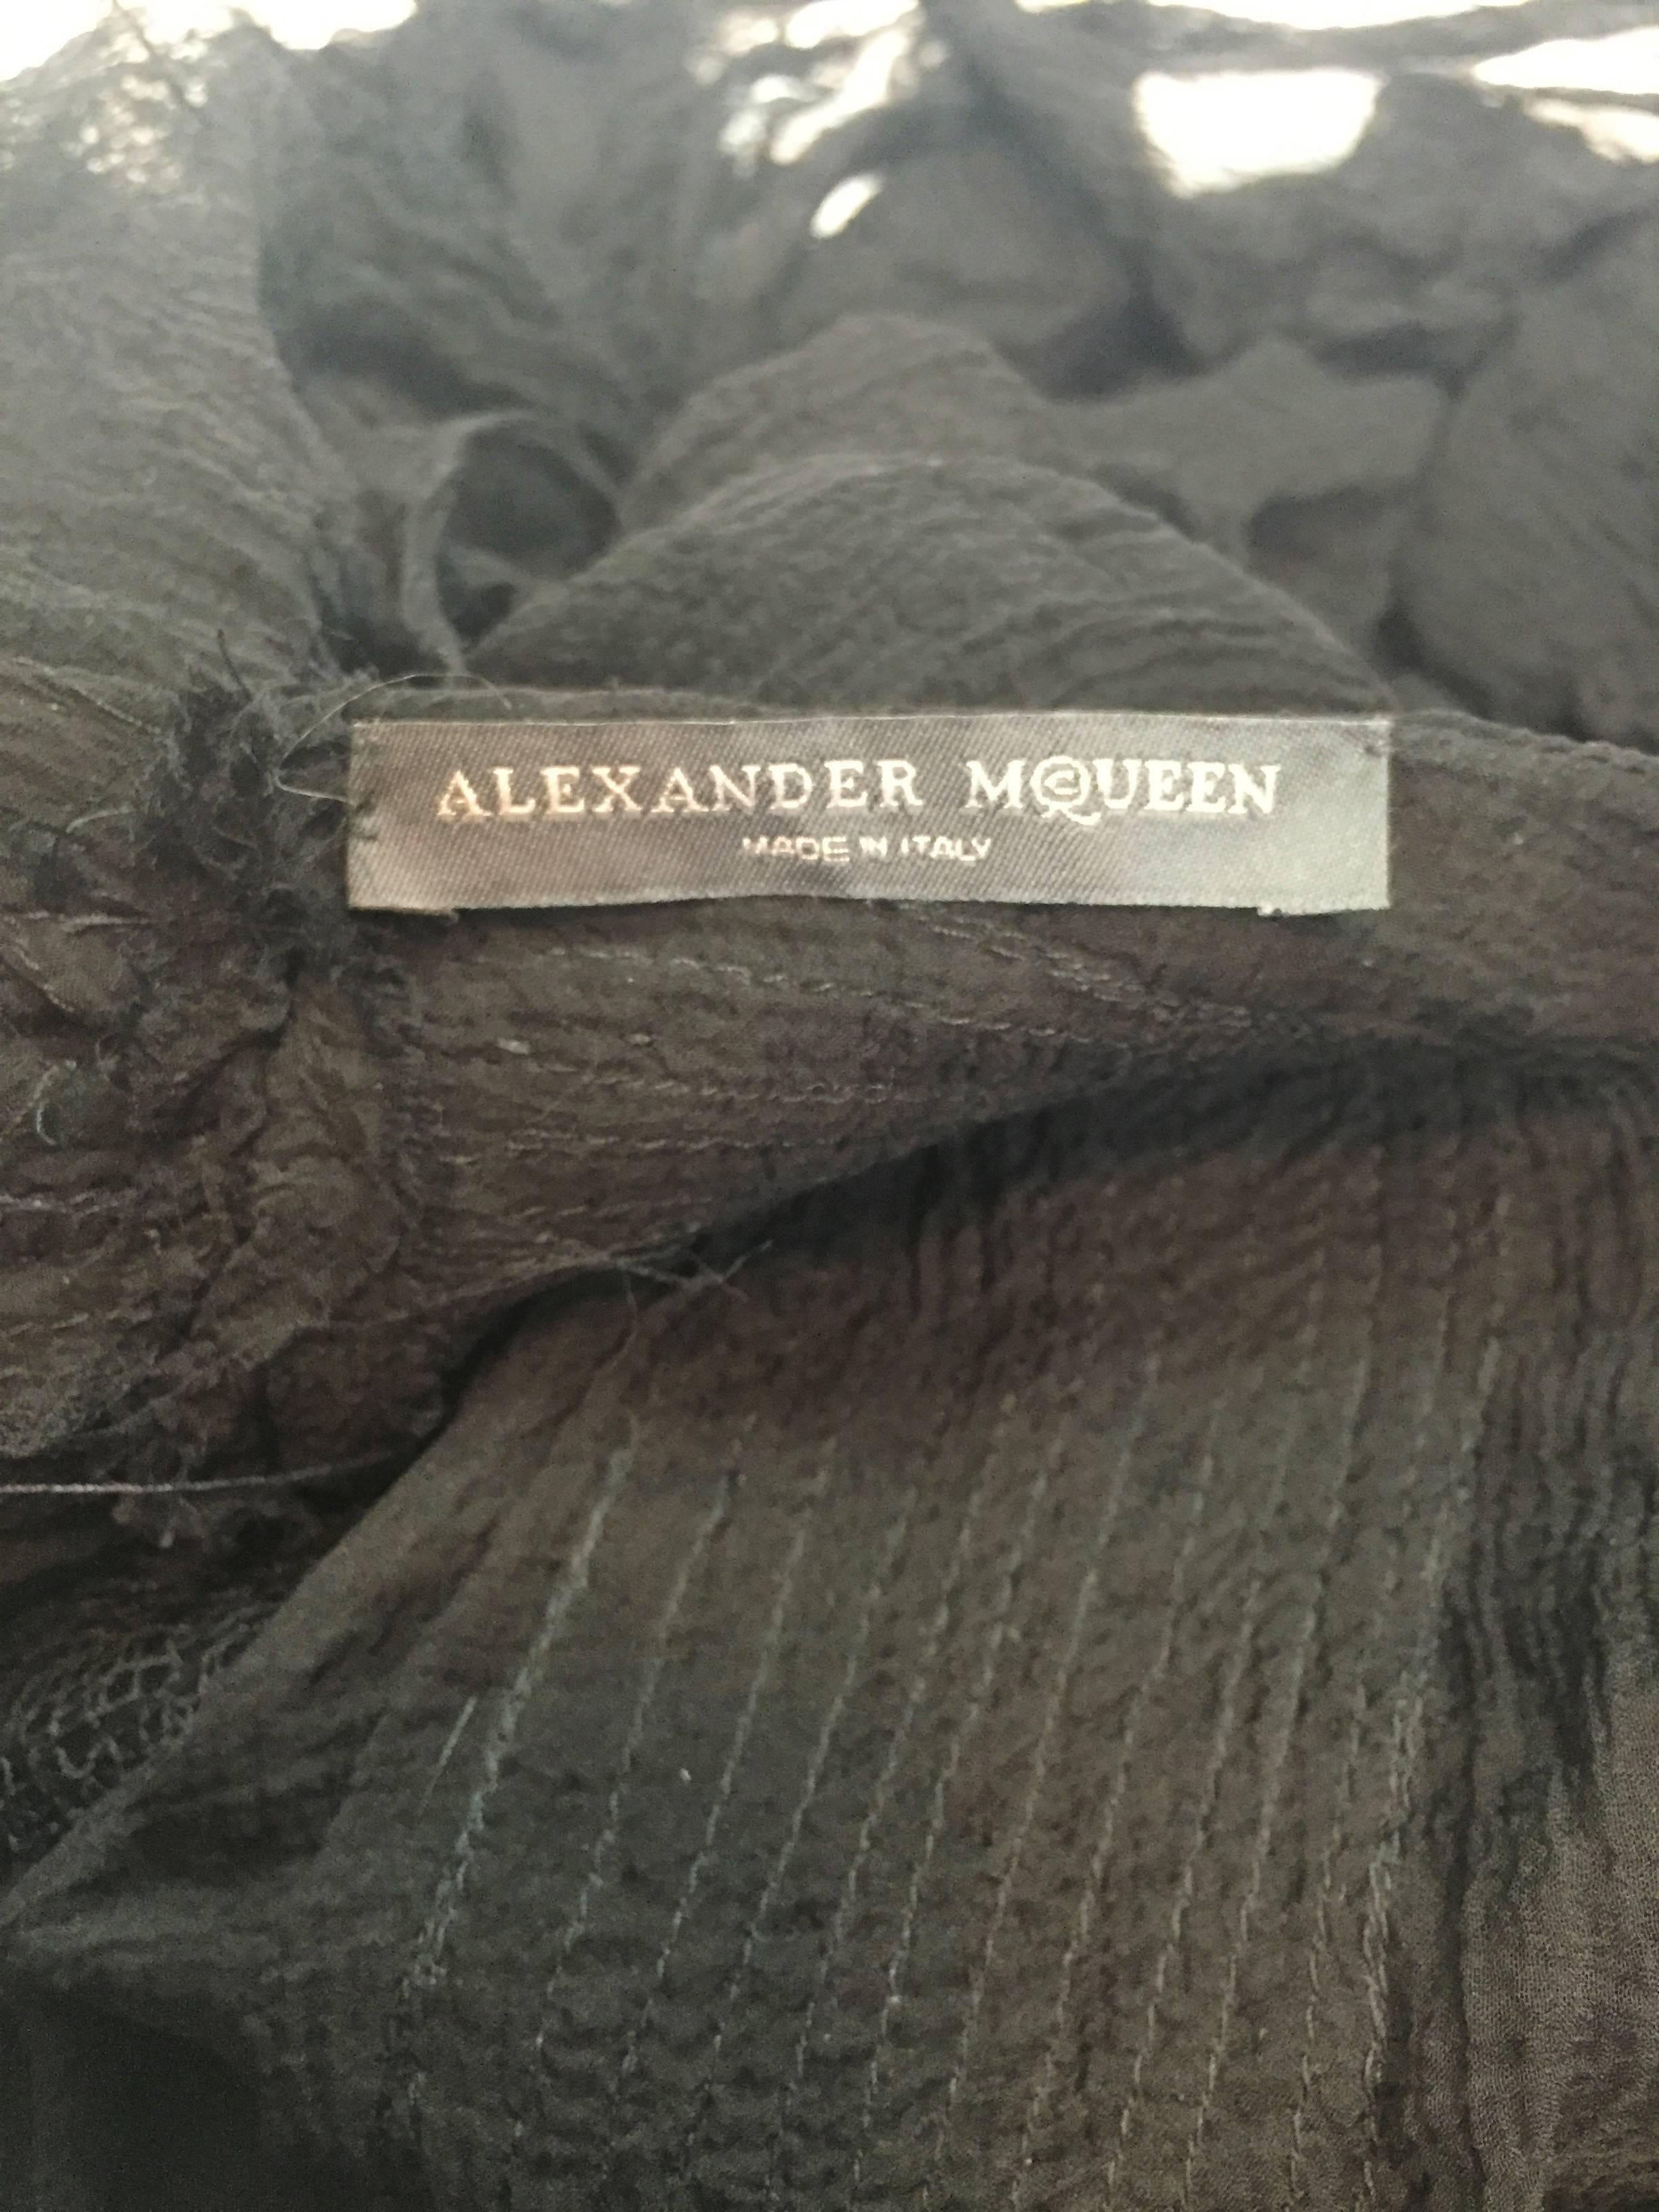 S/S 2003 Alexander McQueen Irere Shipwreck Black Sheer Silk Top 40 3